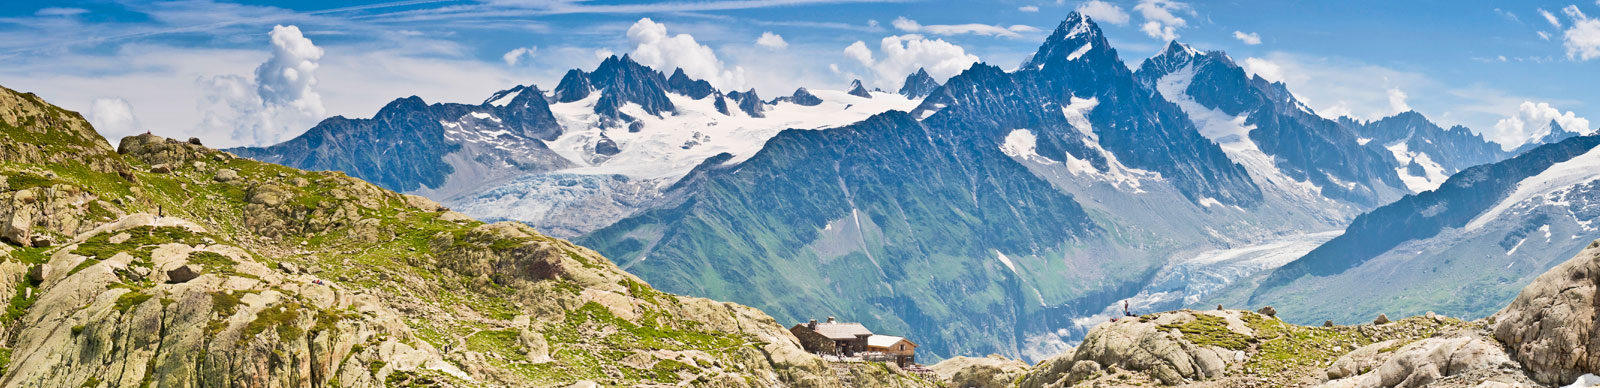 Swiss mountain range